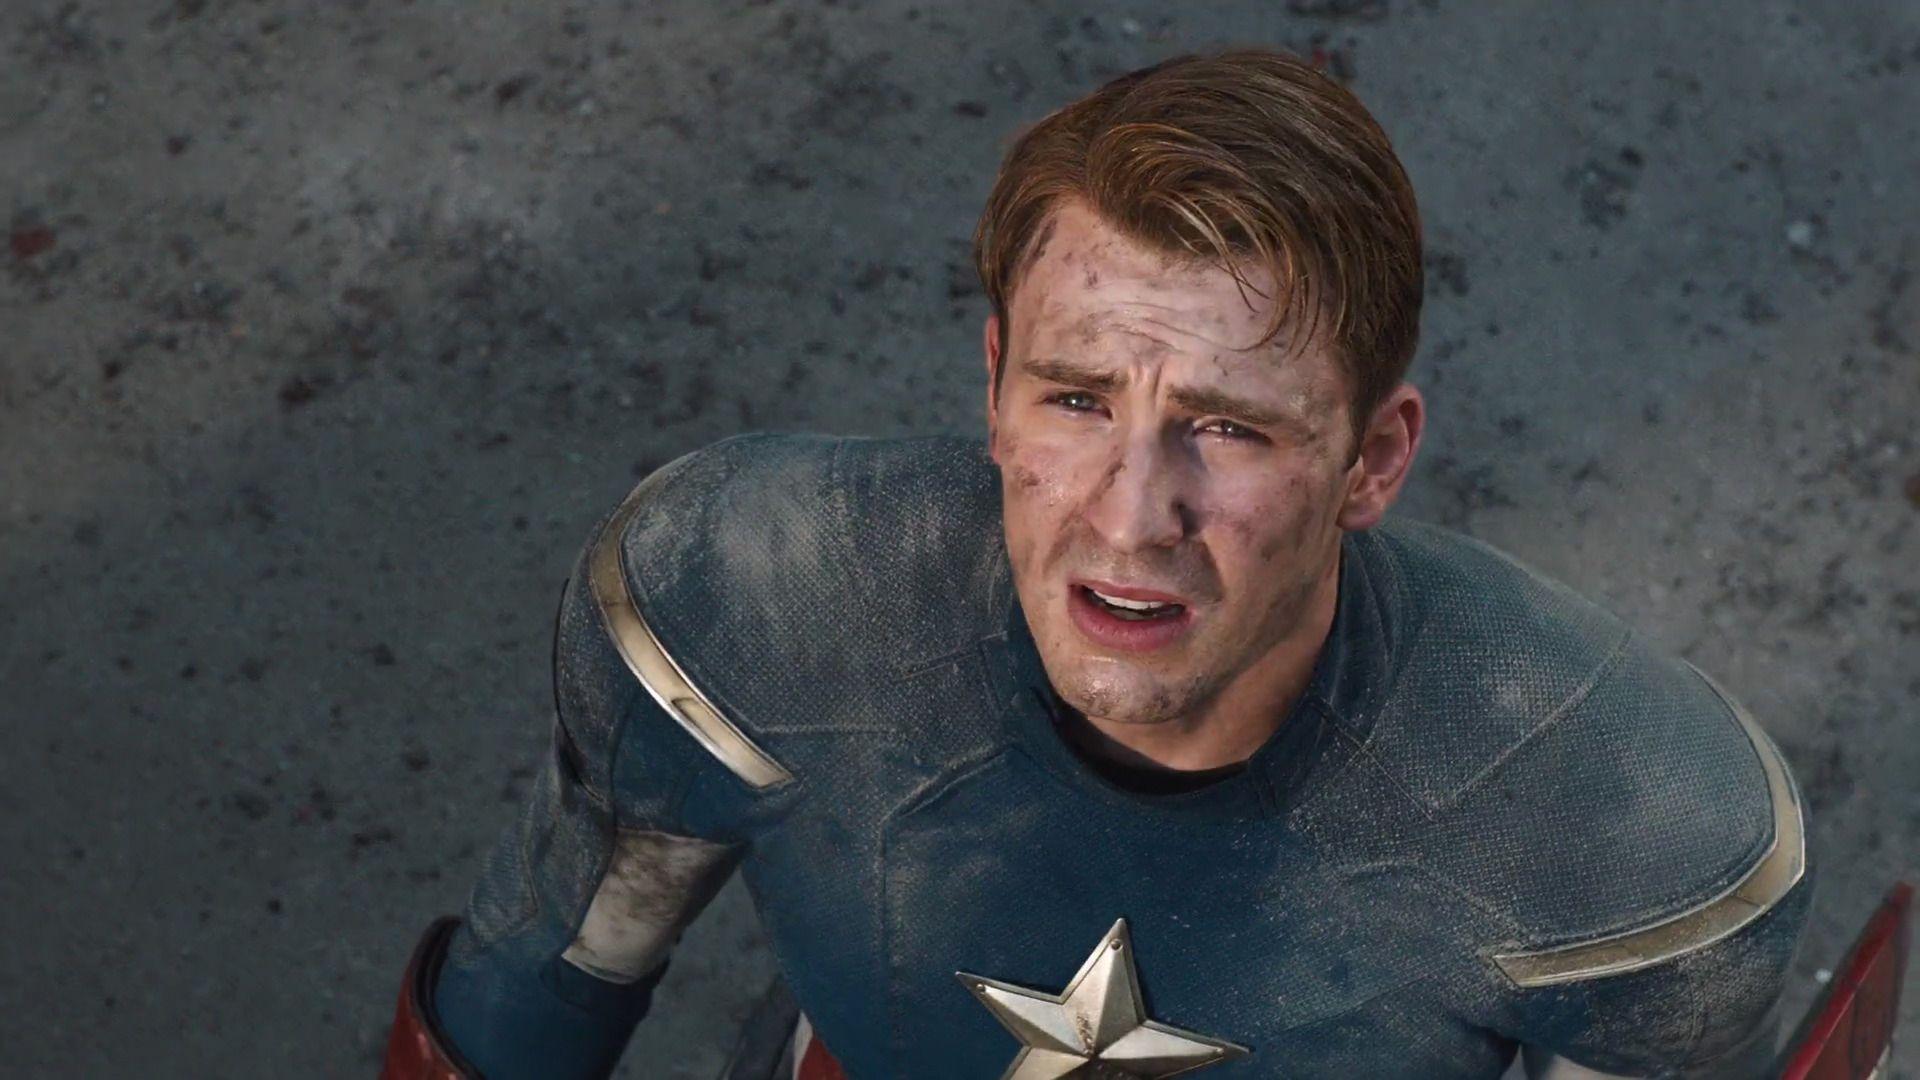 Chris Evans Captain America Evans Acting, Superhero Role